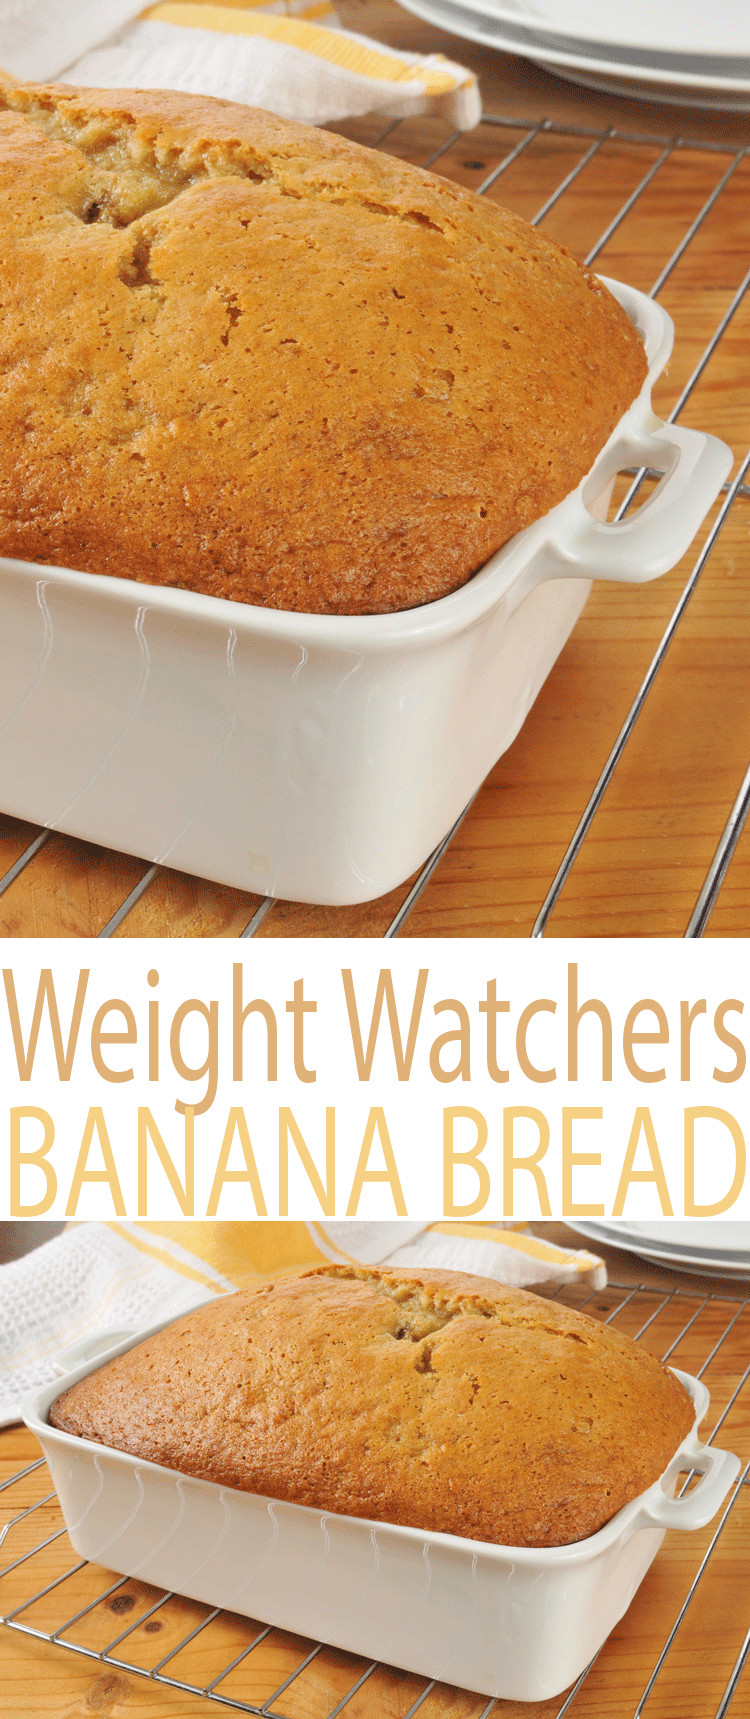 Weight Watchers Banana Bread Recipe
 Weight Watchers Banana Bread Recipe